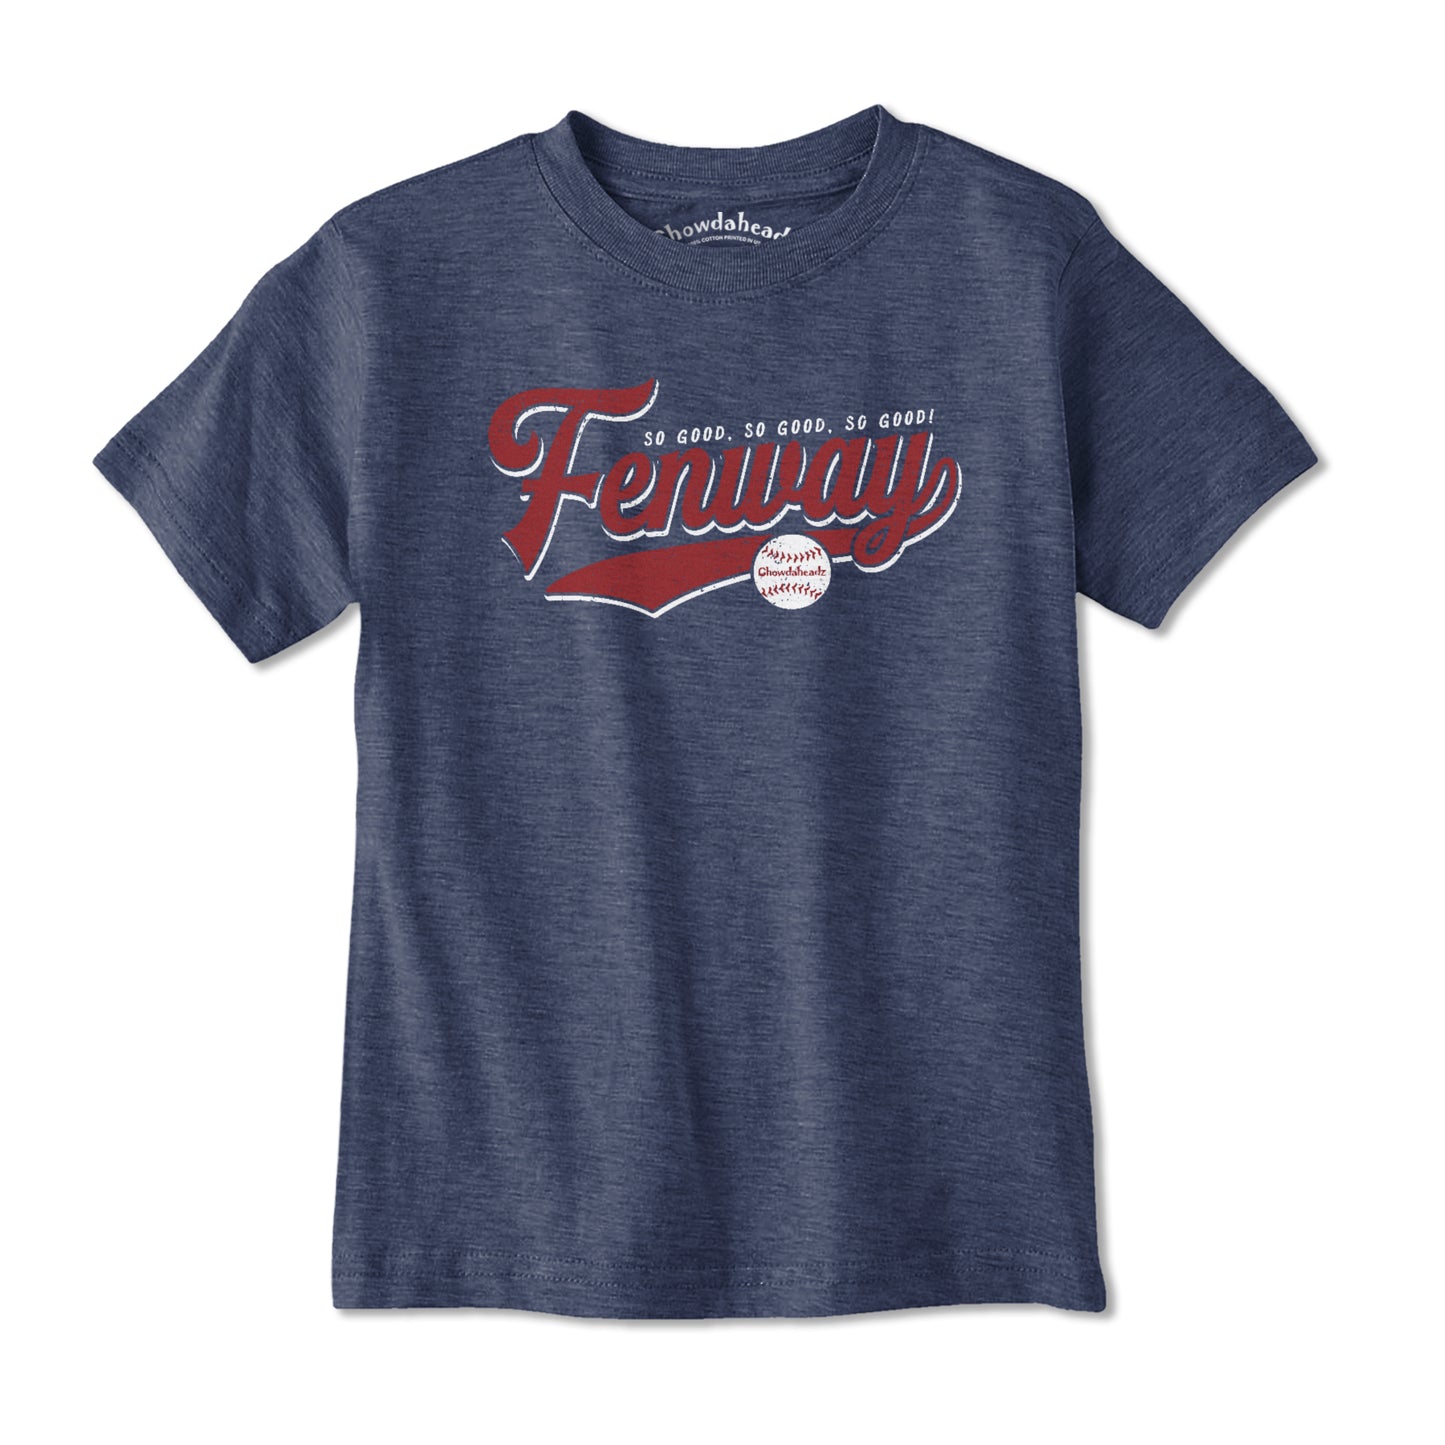 Fenway Tailsweep Youth T-Shirt - Chowdaheadz